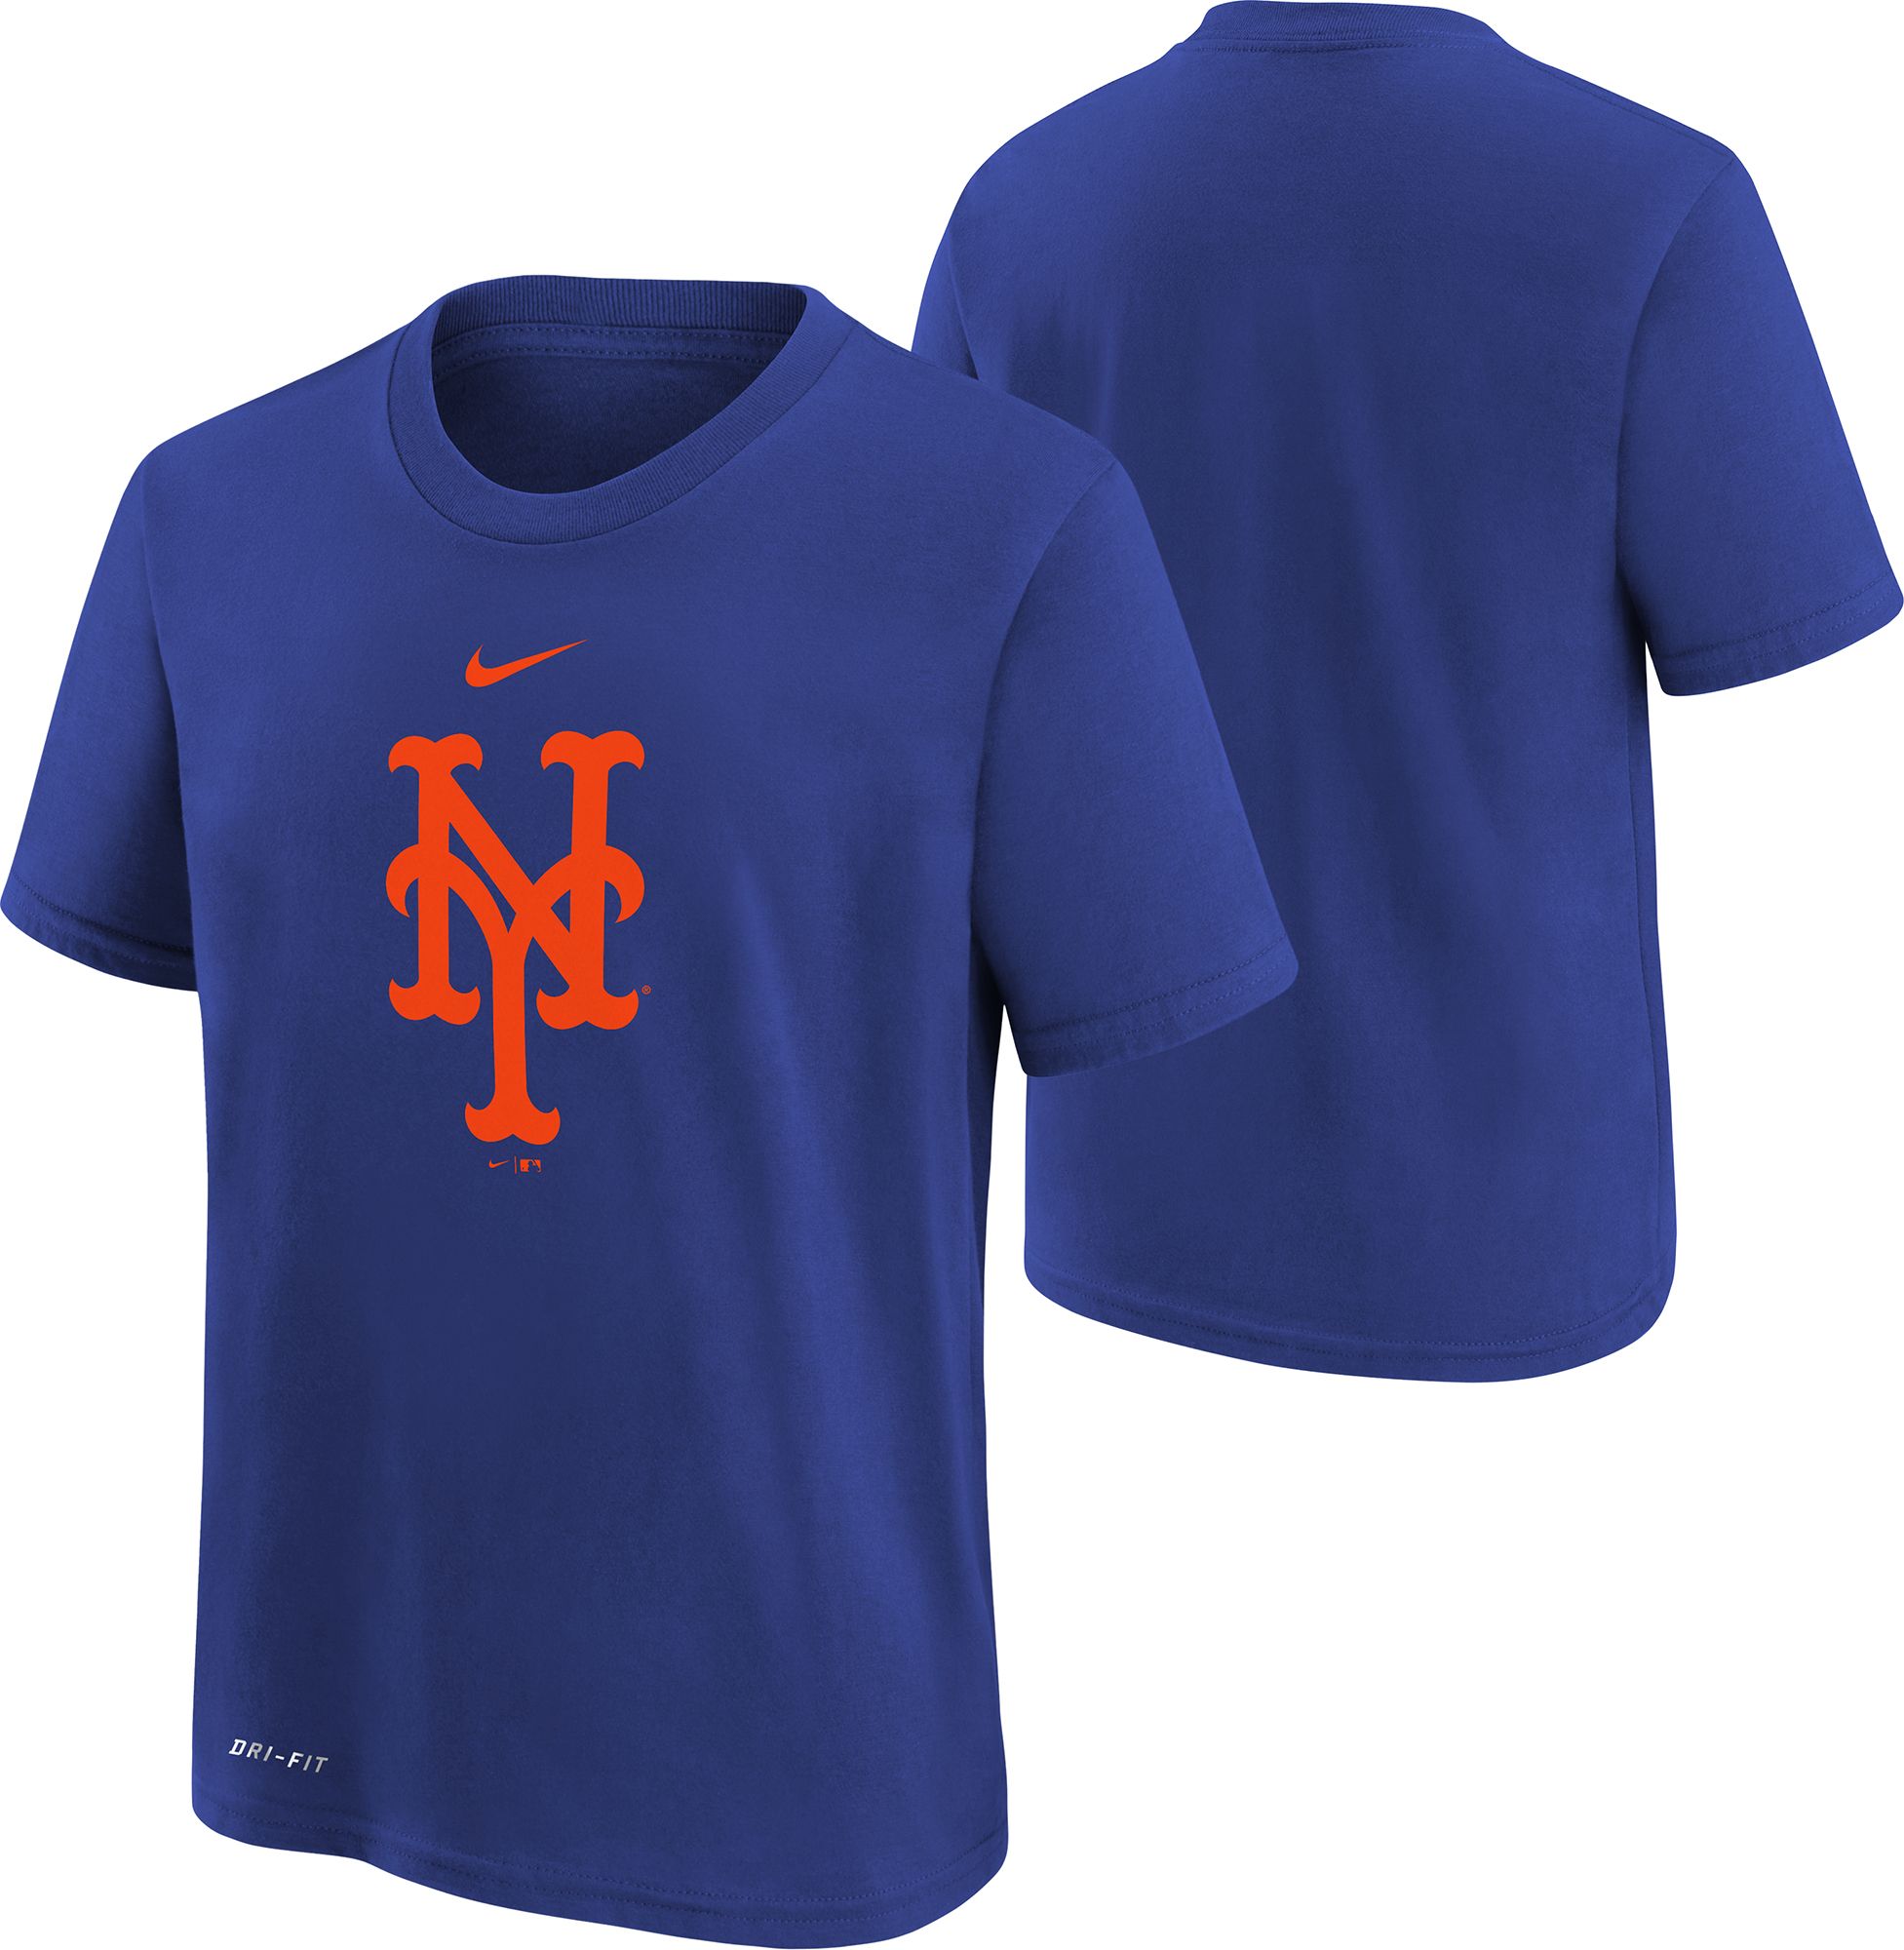 Youth Boys' New York Mets Blue Logo Legend T-Shirt